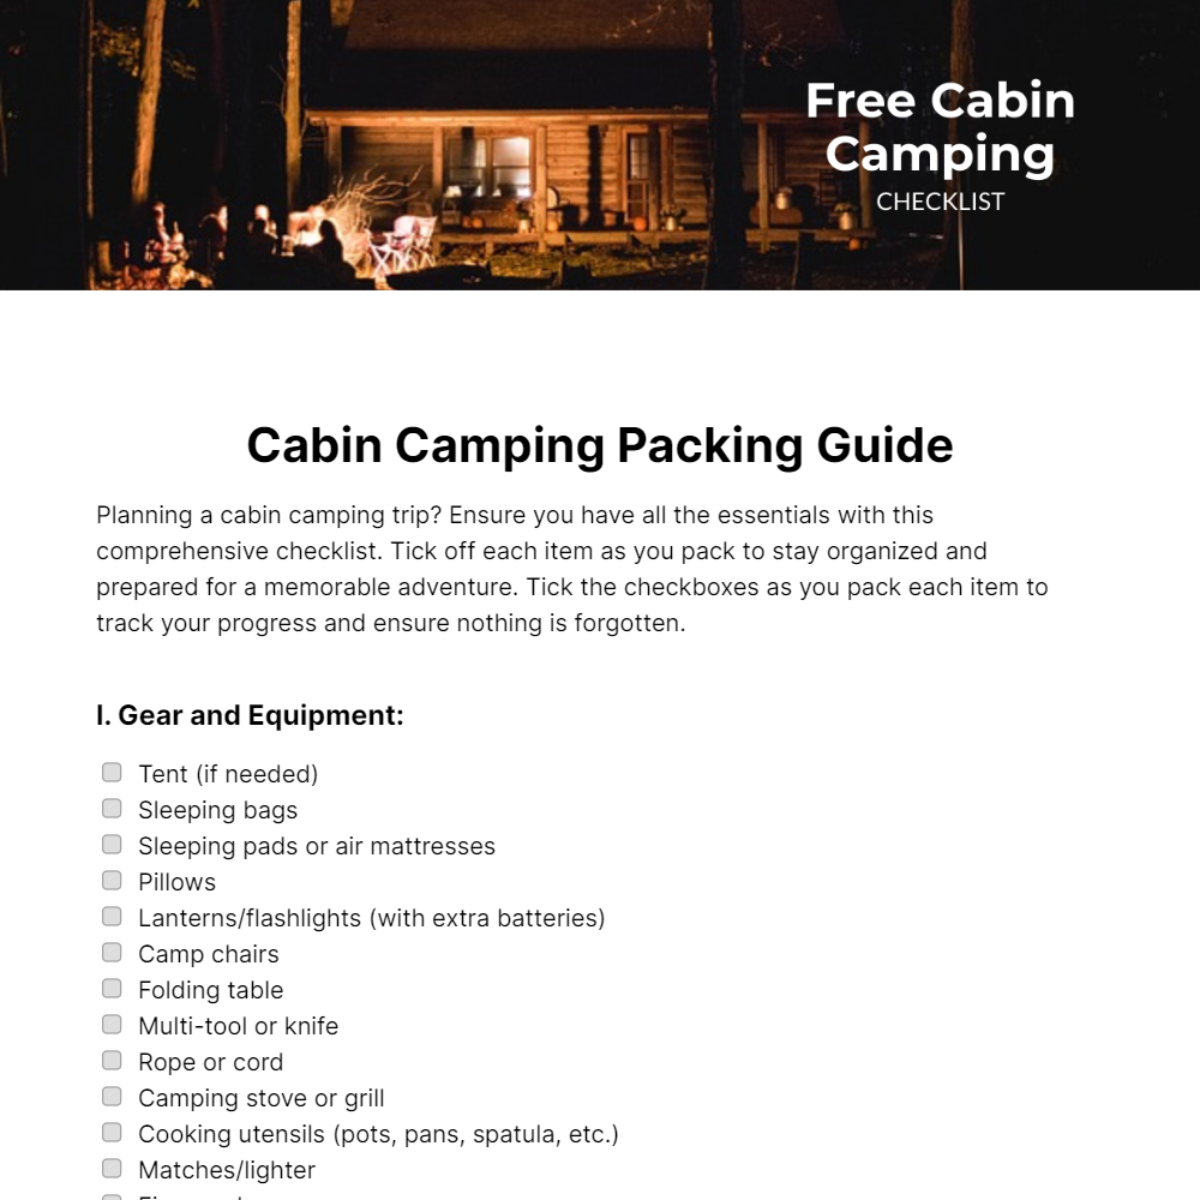 Free Cabin Camping Checklist Template